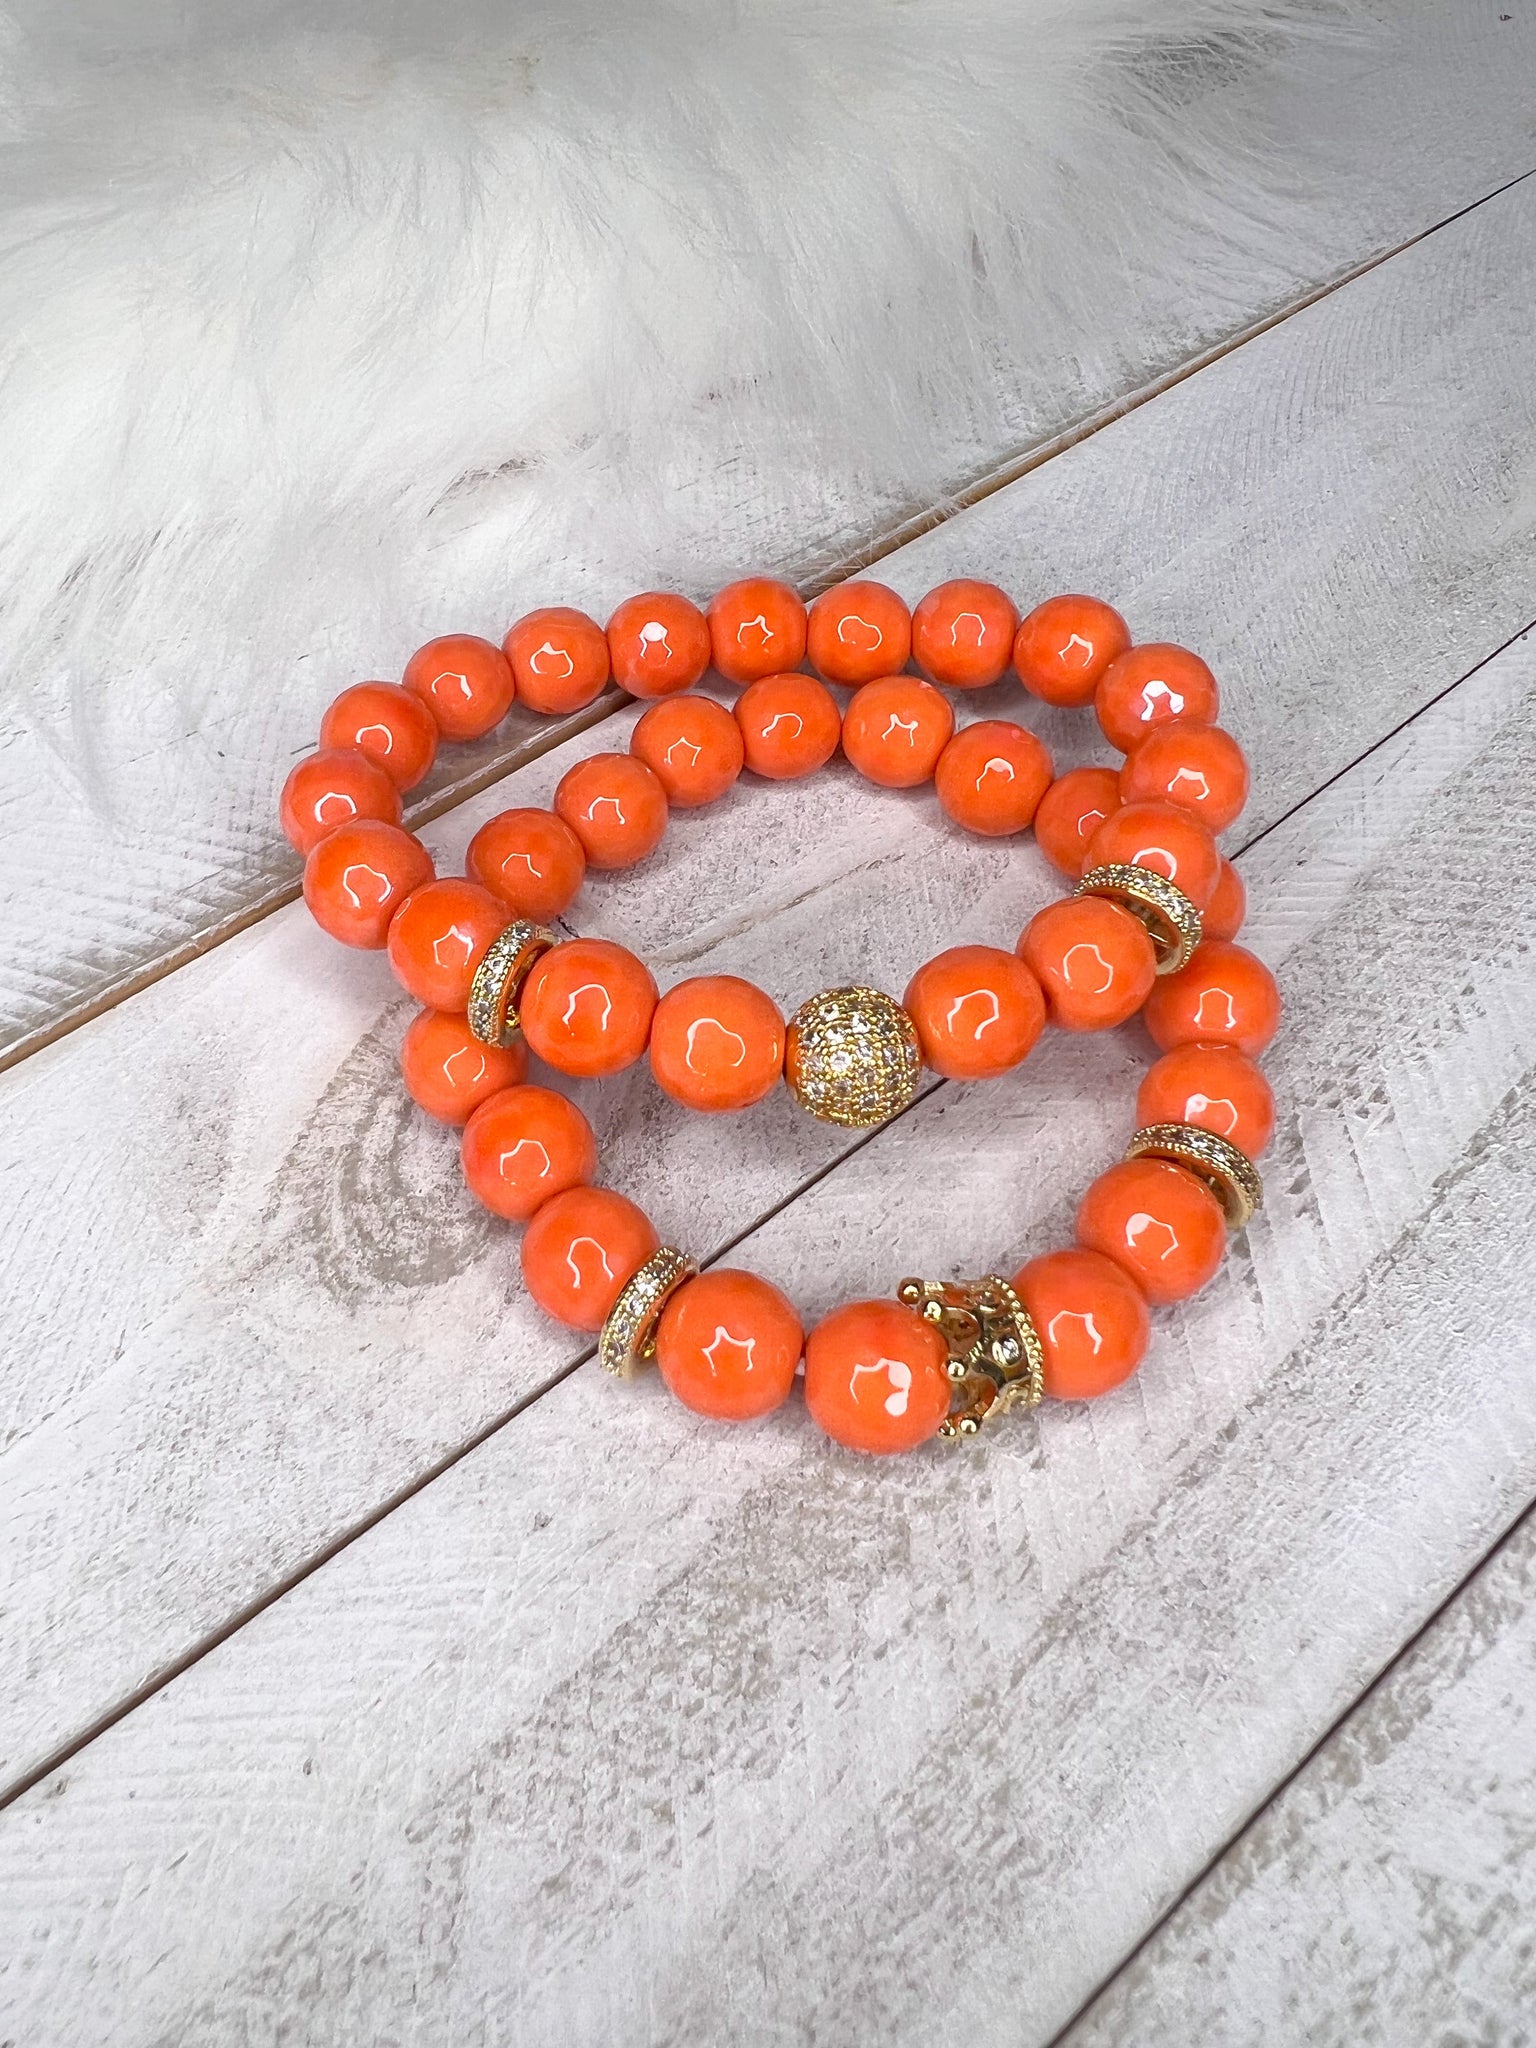 Orange beads bracelet | Clay bracelet, Beaded bracelets, Beads bracelet  design